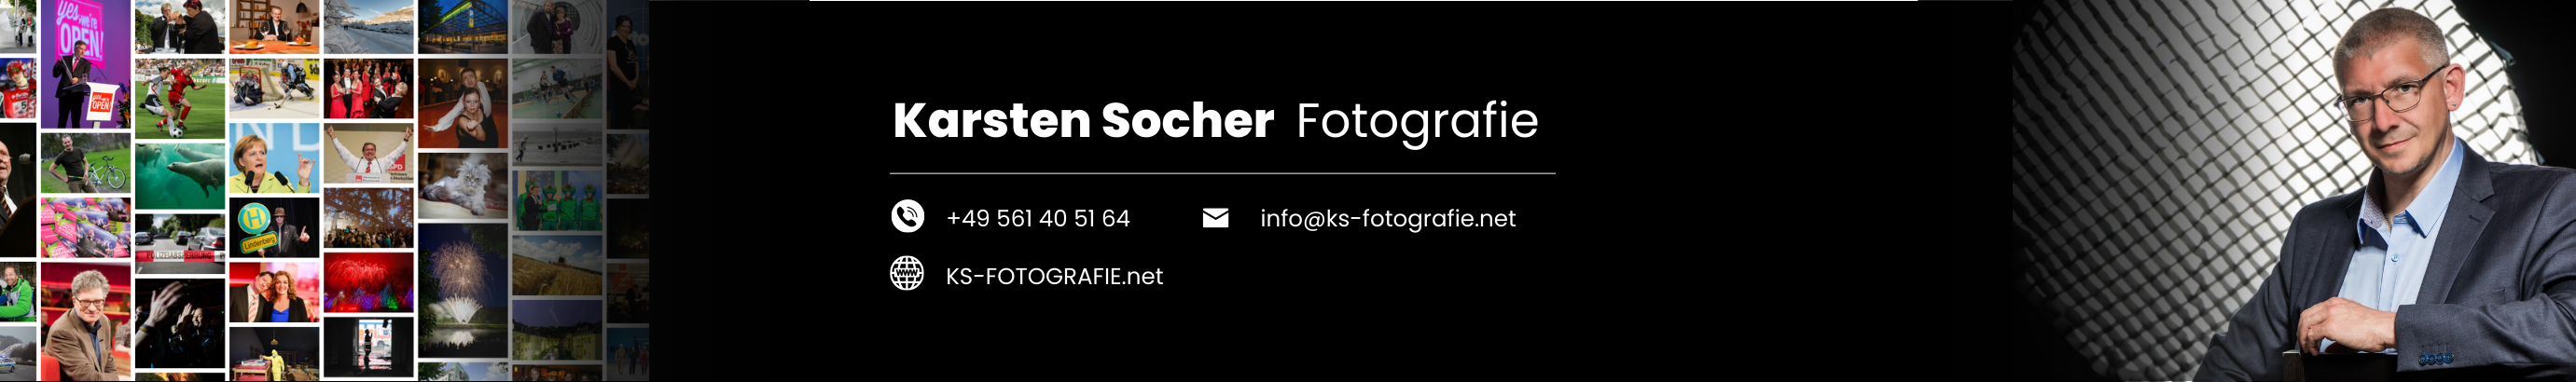 Bannière de profil de Karsten Socher